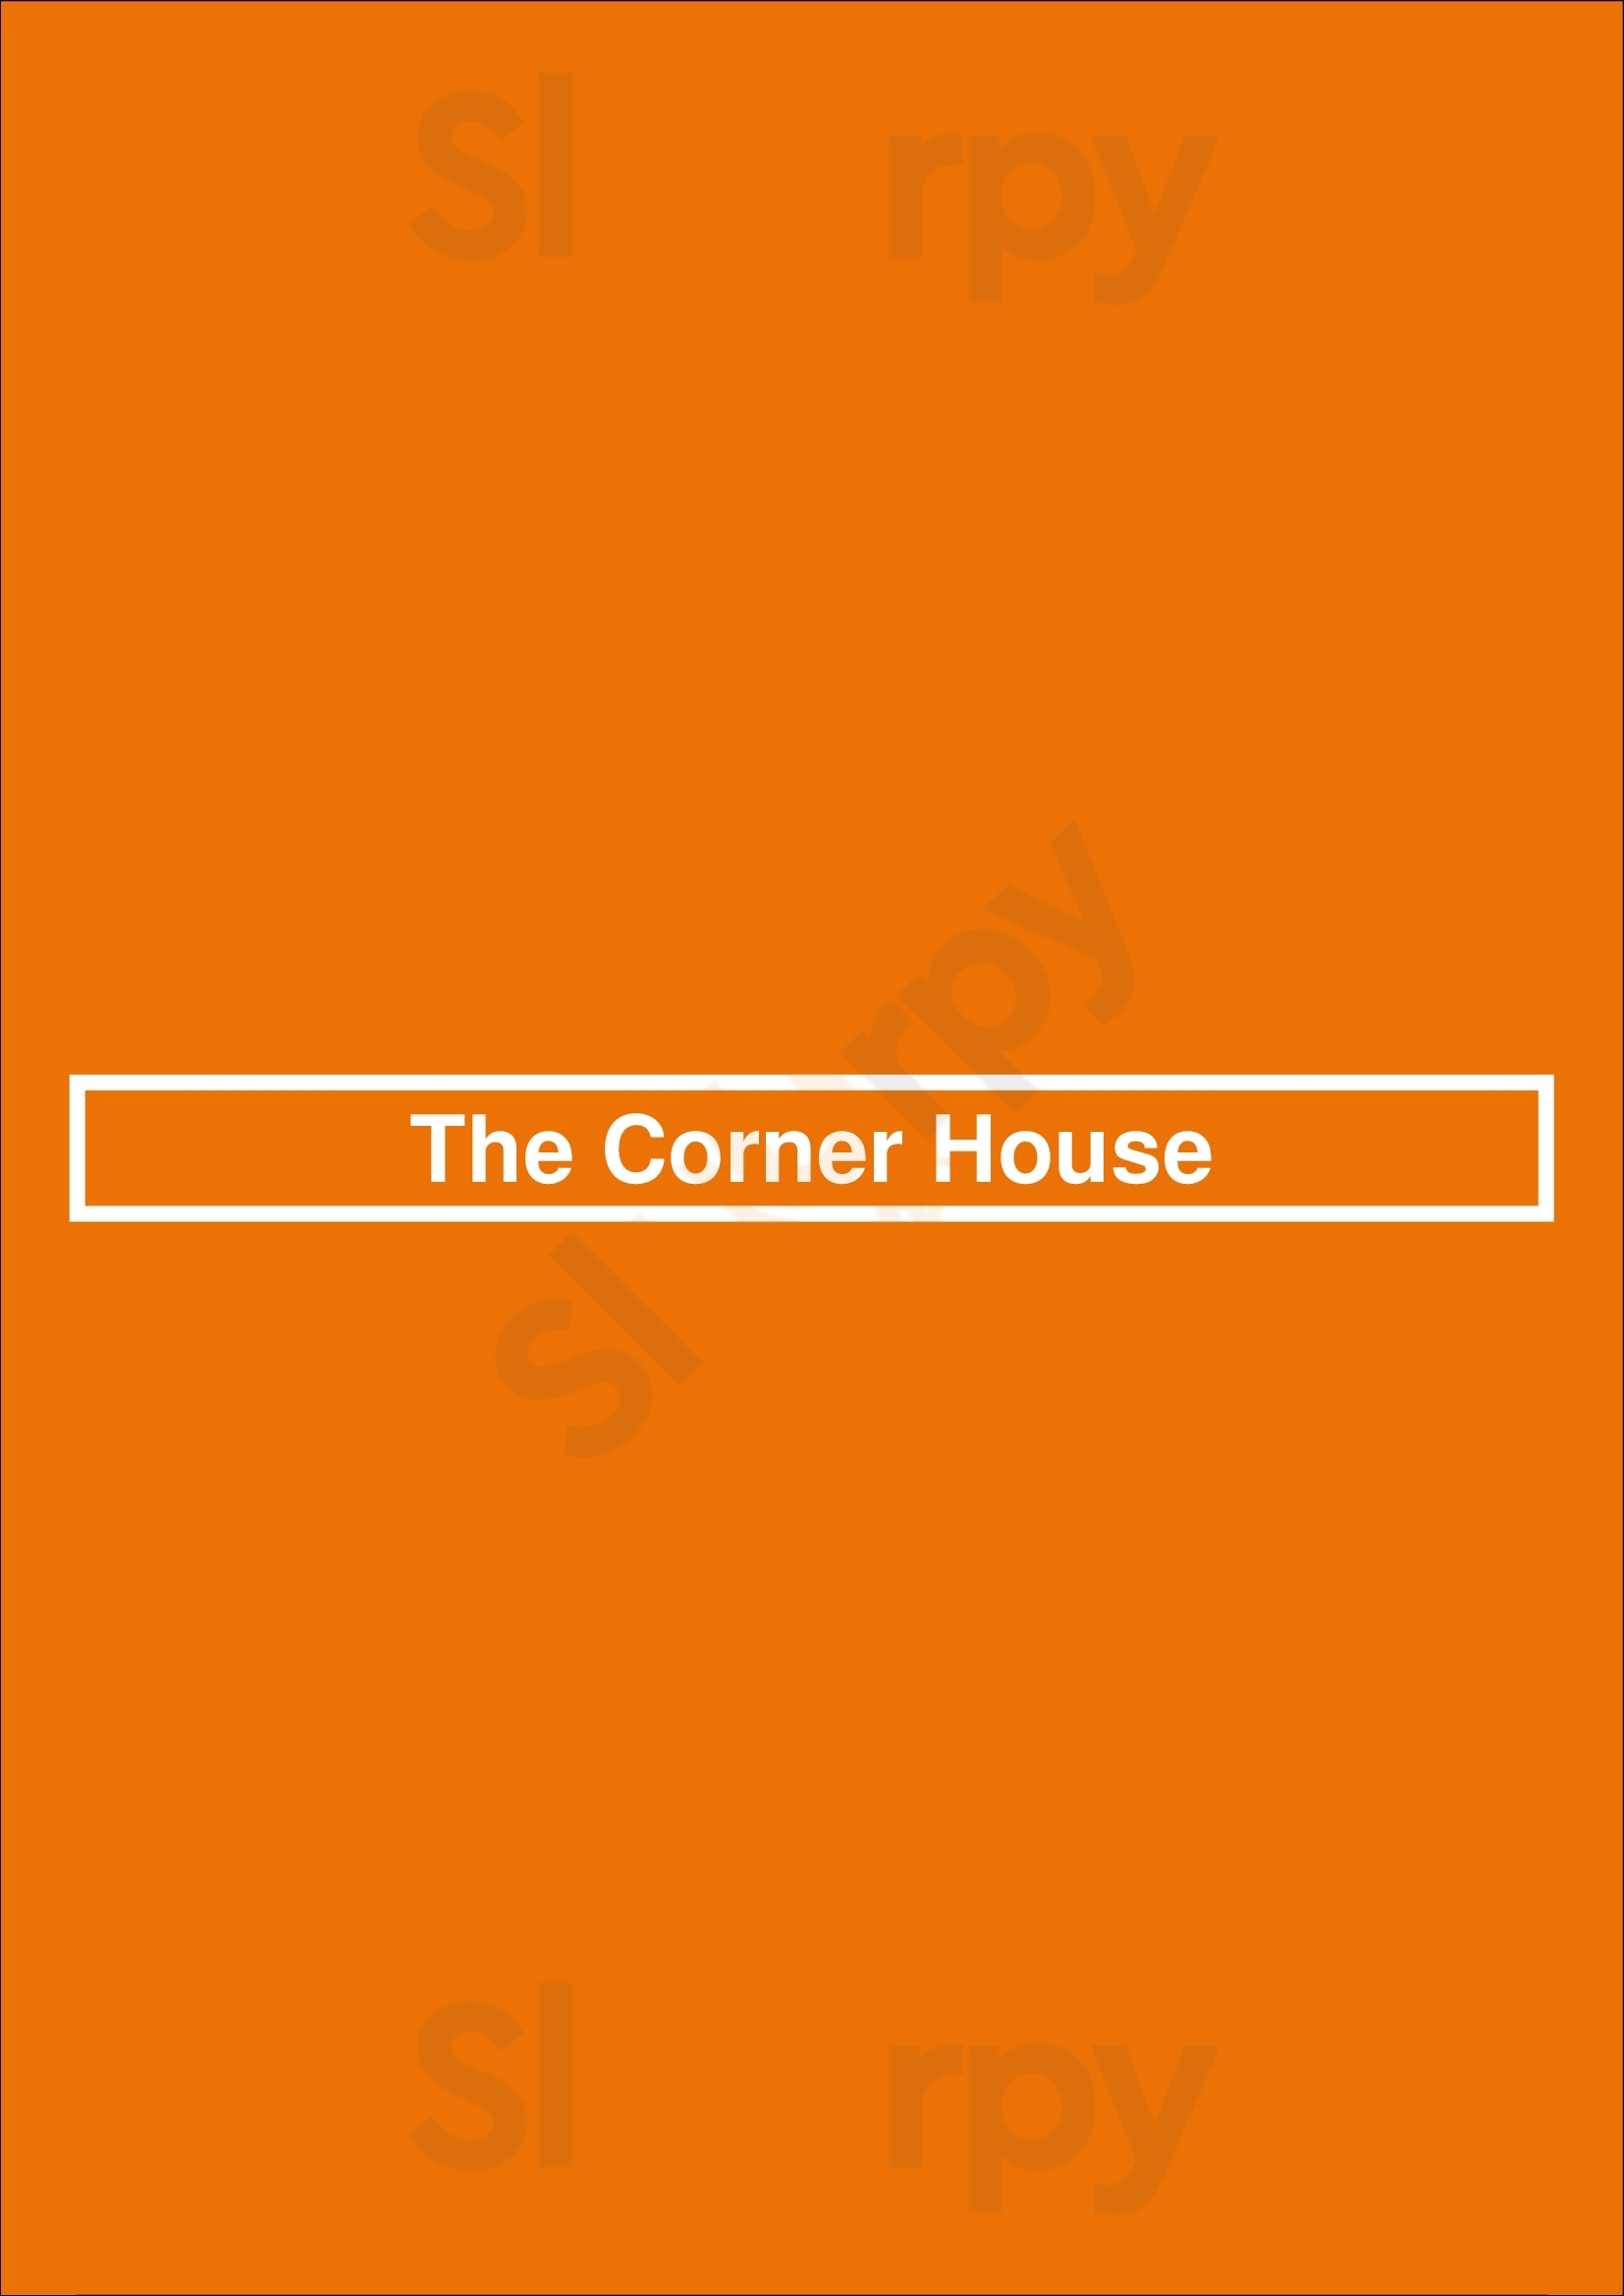 The Corner House Bondi Menu - 1